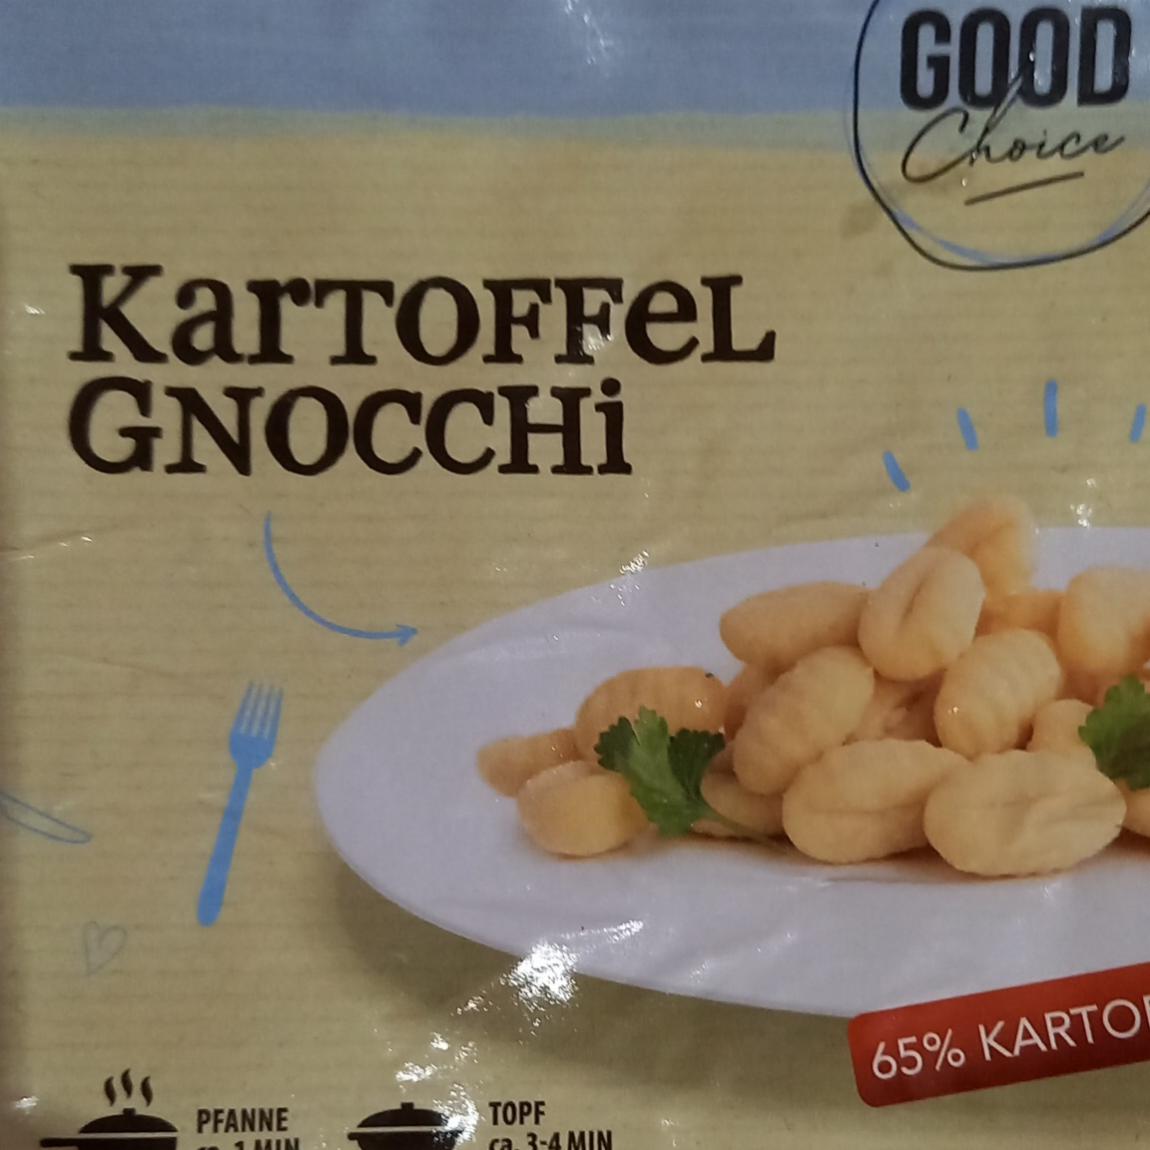 Fotografie - Kartoffel Gnocchi Good choice